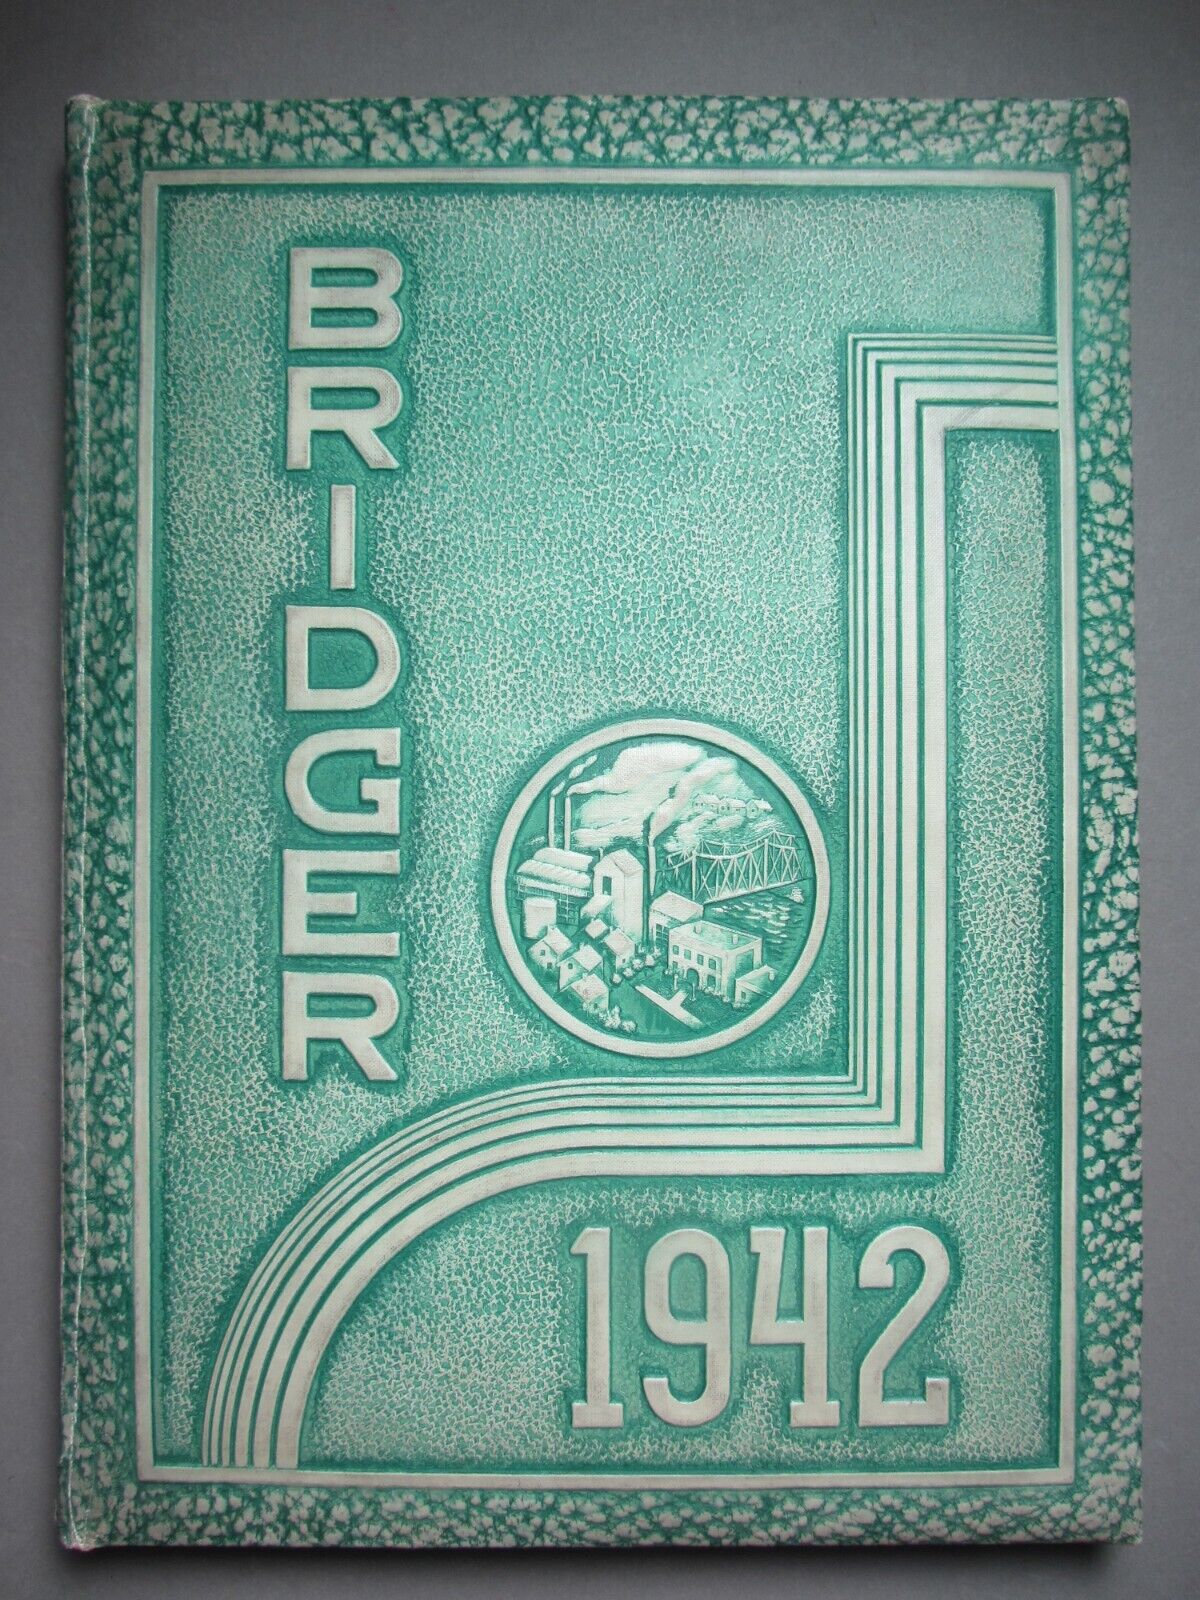 1942 BRIDGER Yearbook - Ambridge High School - Beaver County PA - War Years